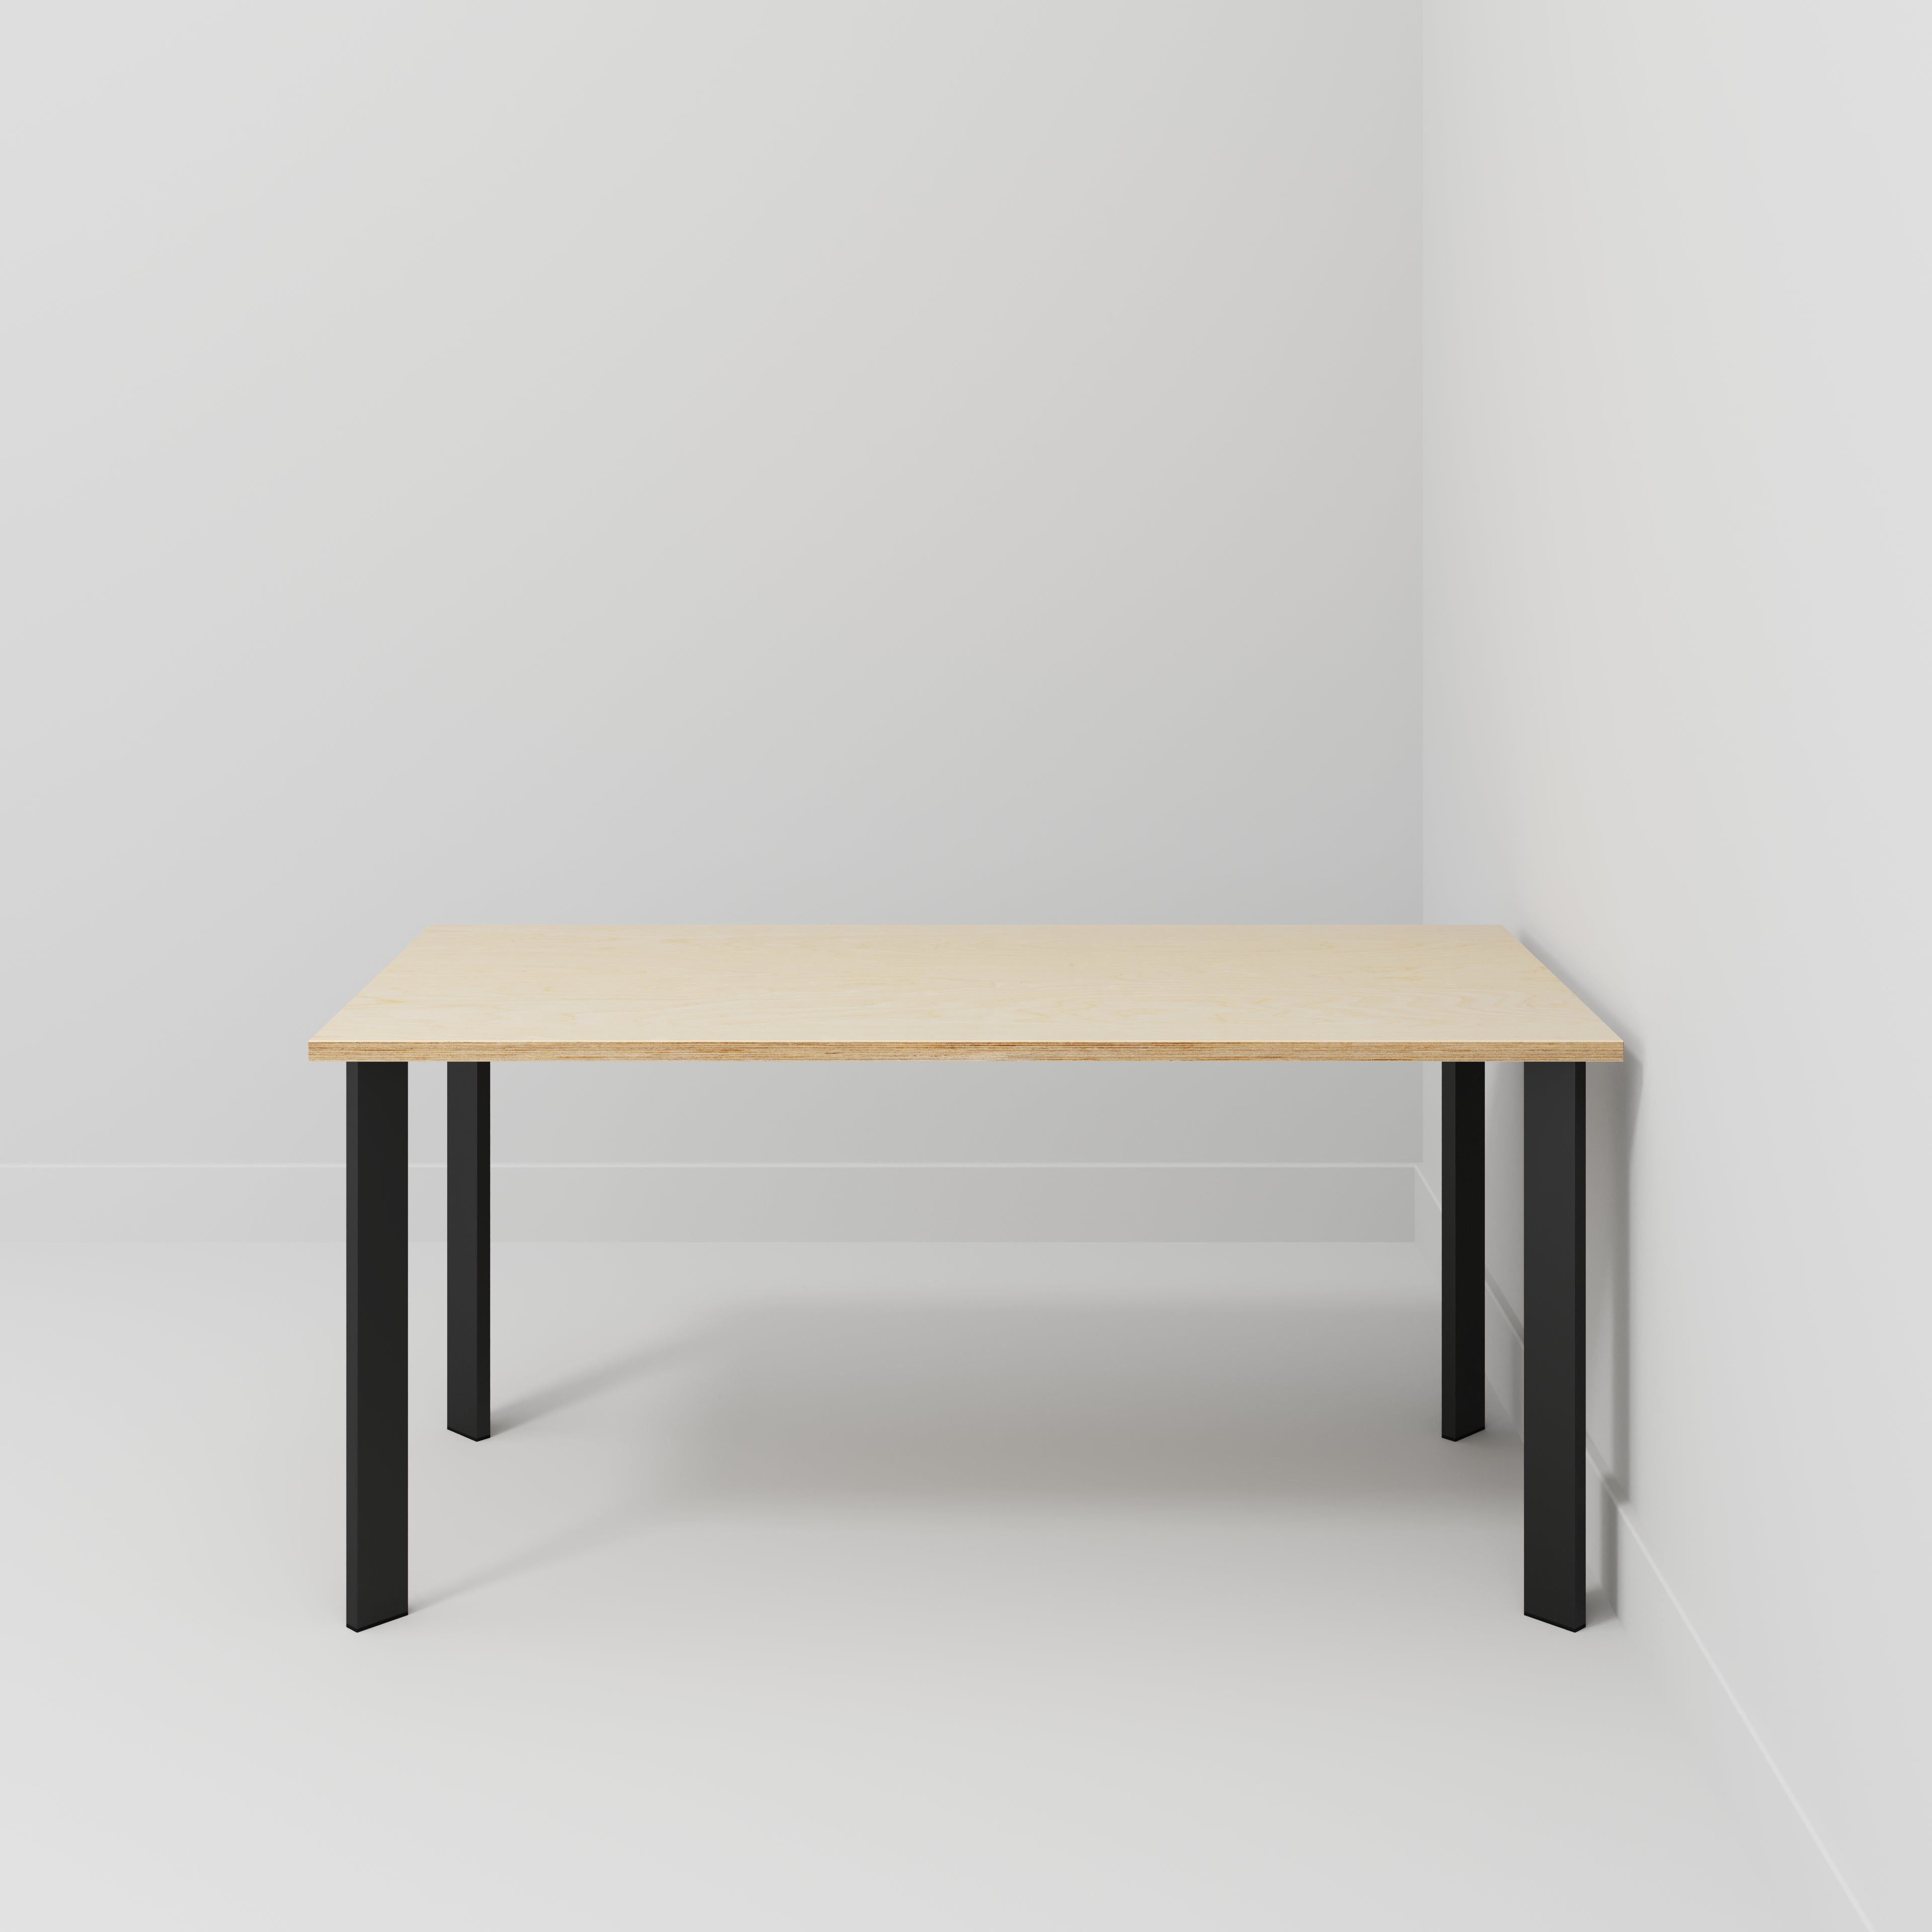 Custom Plywood Table with Rectangular Single Pin Legs